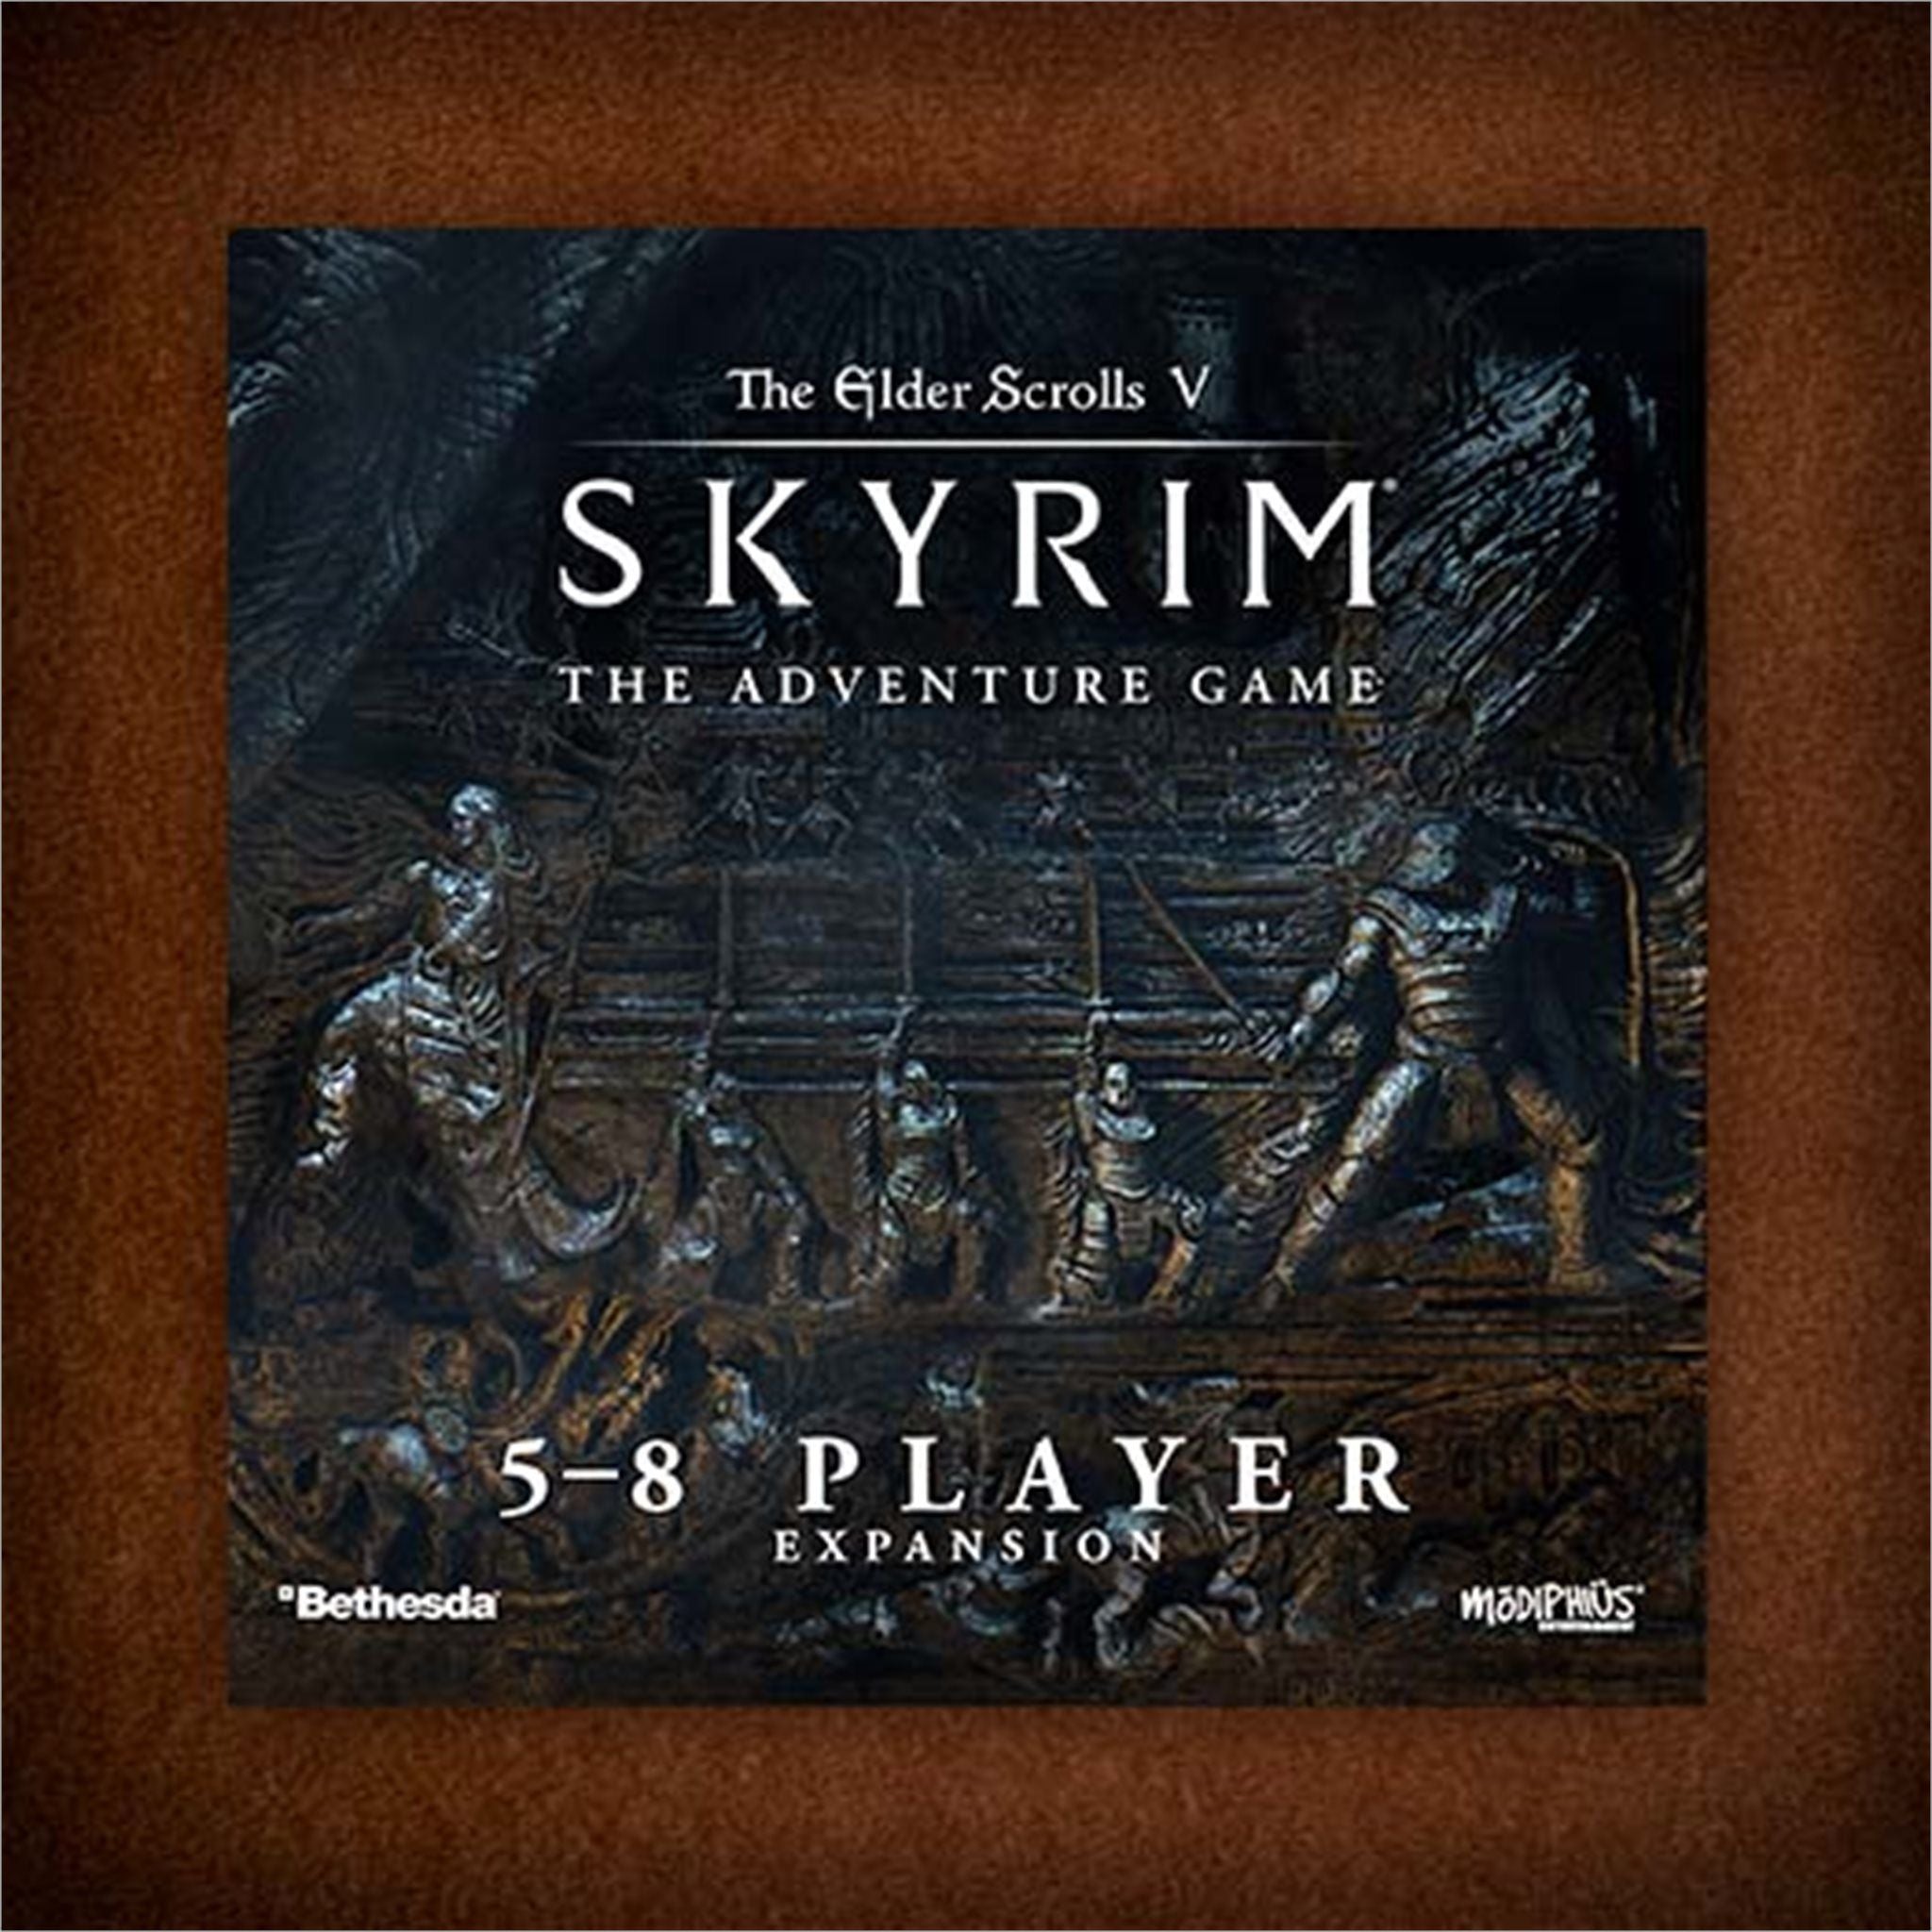 The Elder Scrolls V Skyrim The Adventure Game 5-8 Player Expansion